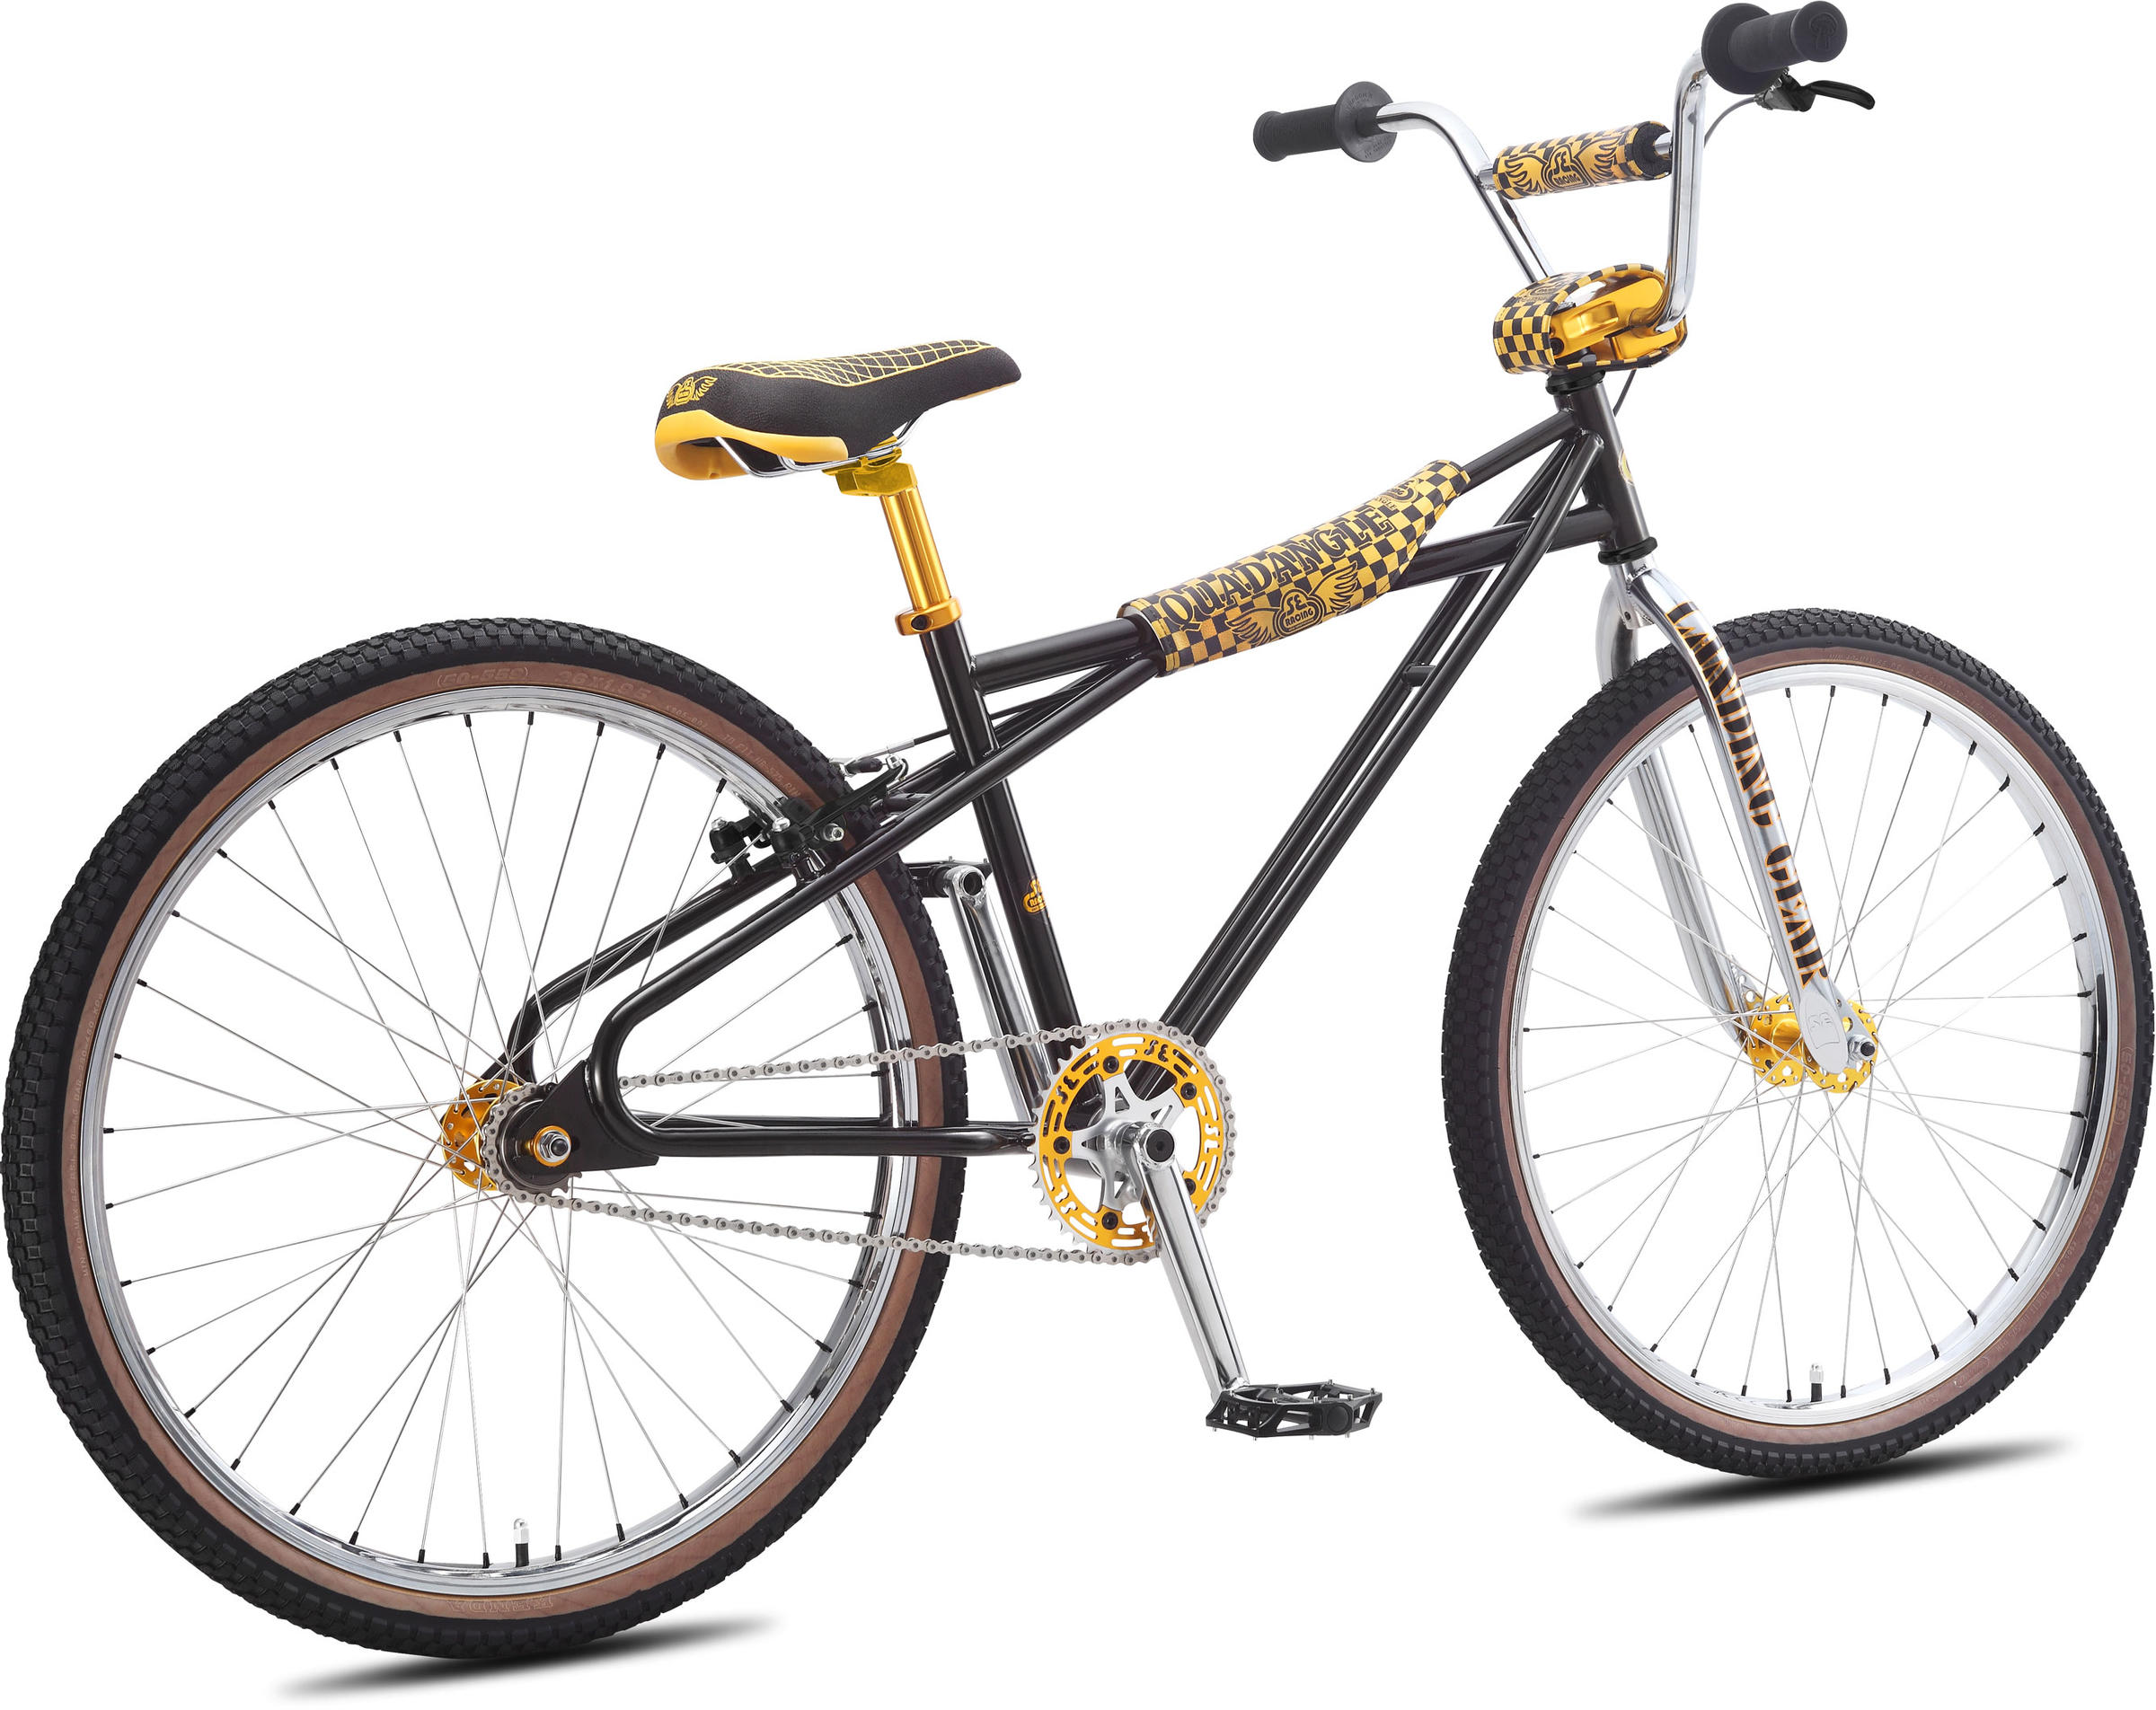 26 inch bmx bikes for sale